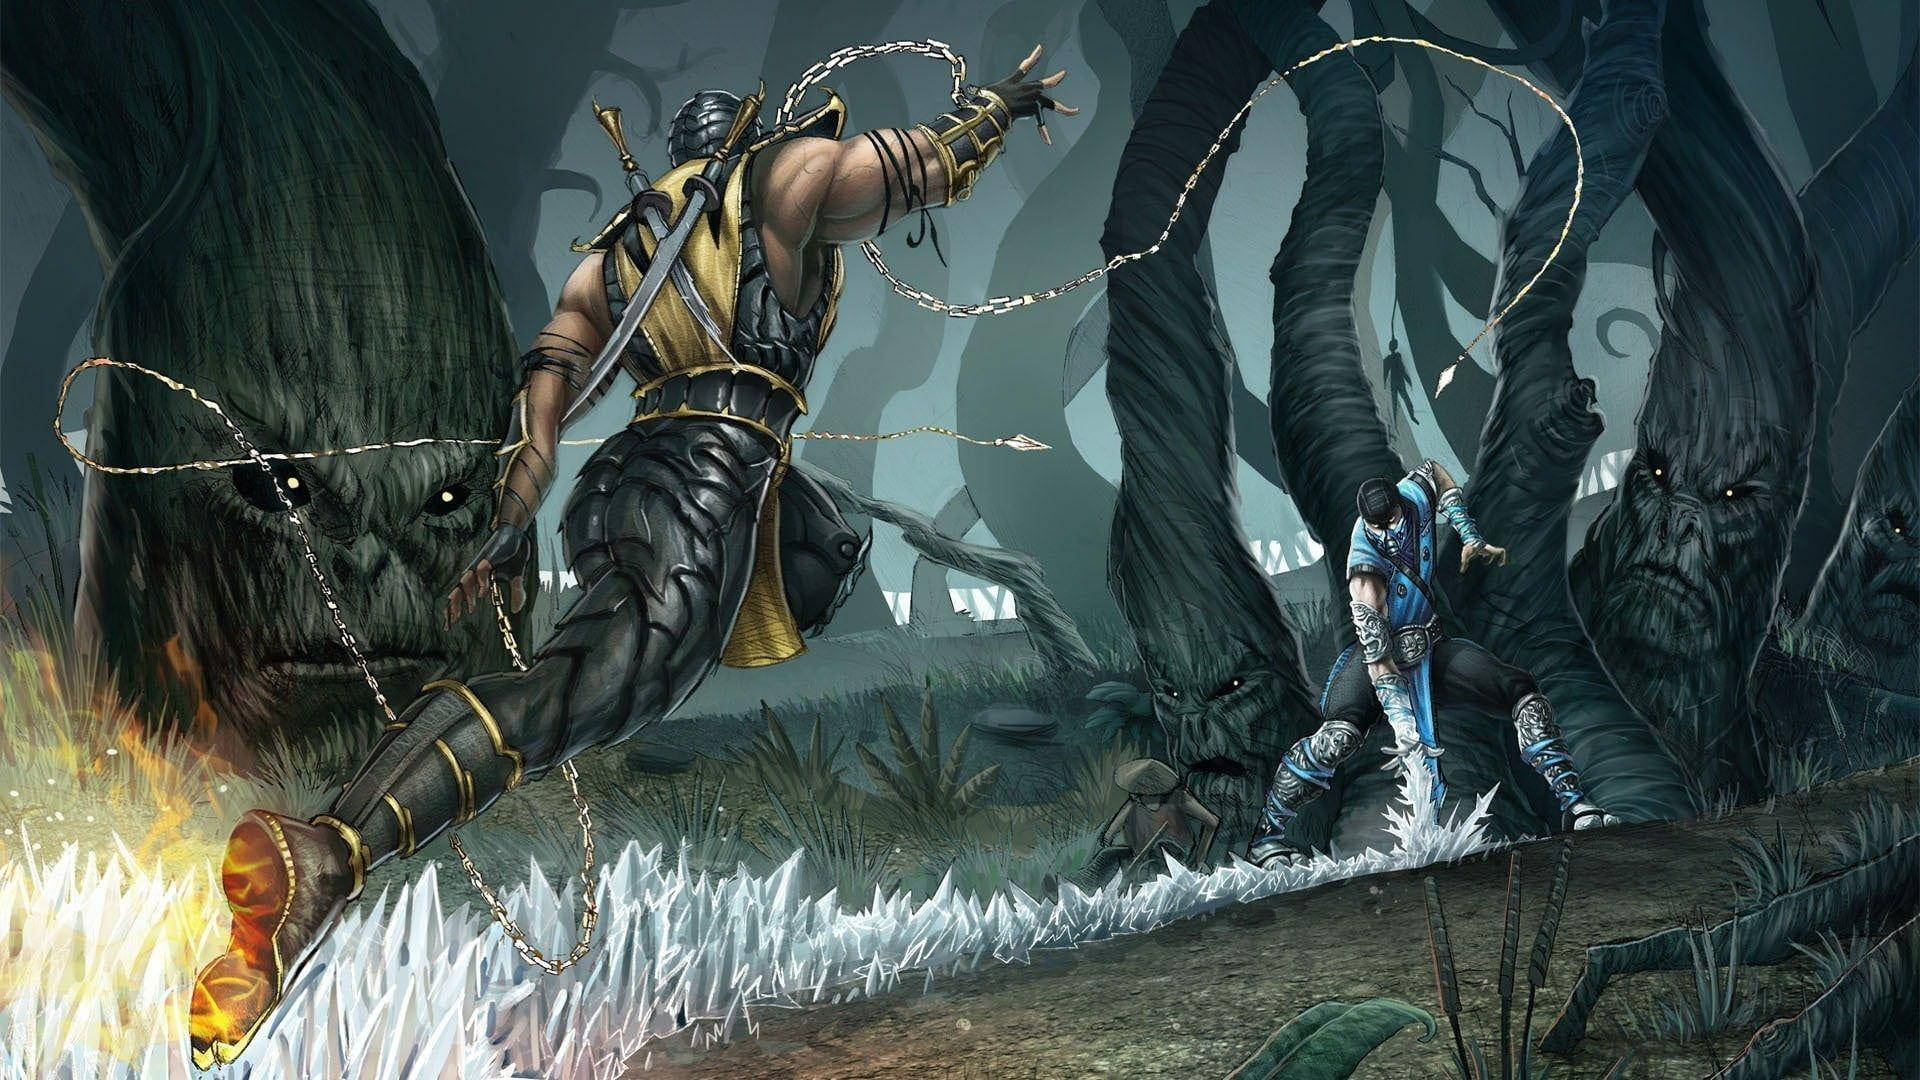 Mortal Kombat Scorpion Vs Sub Zero In Forest Background